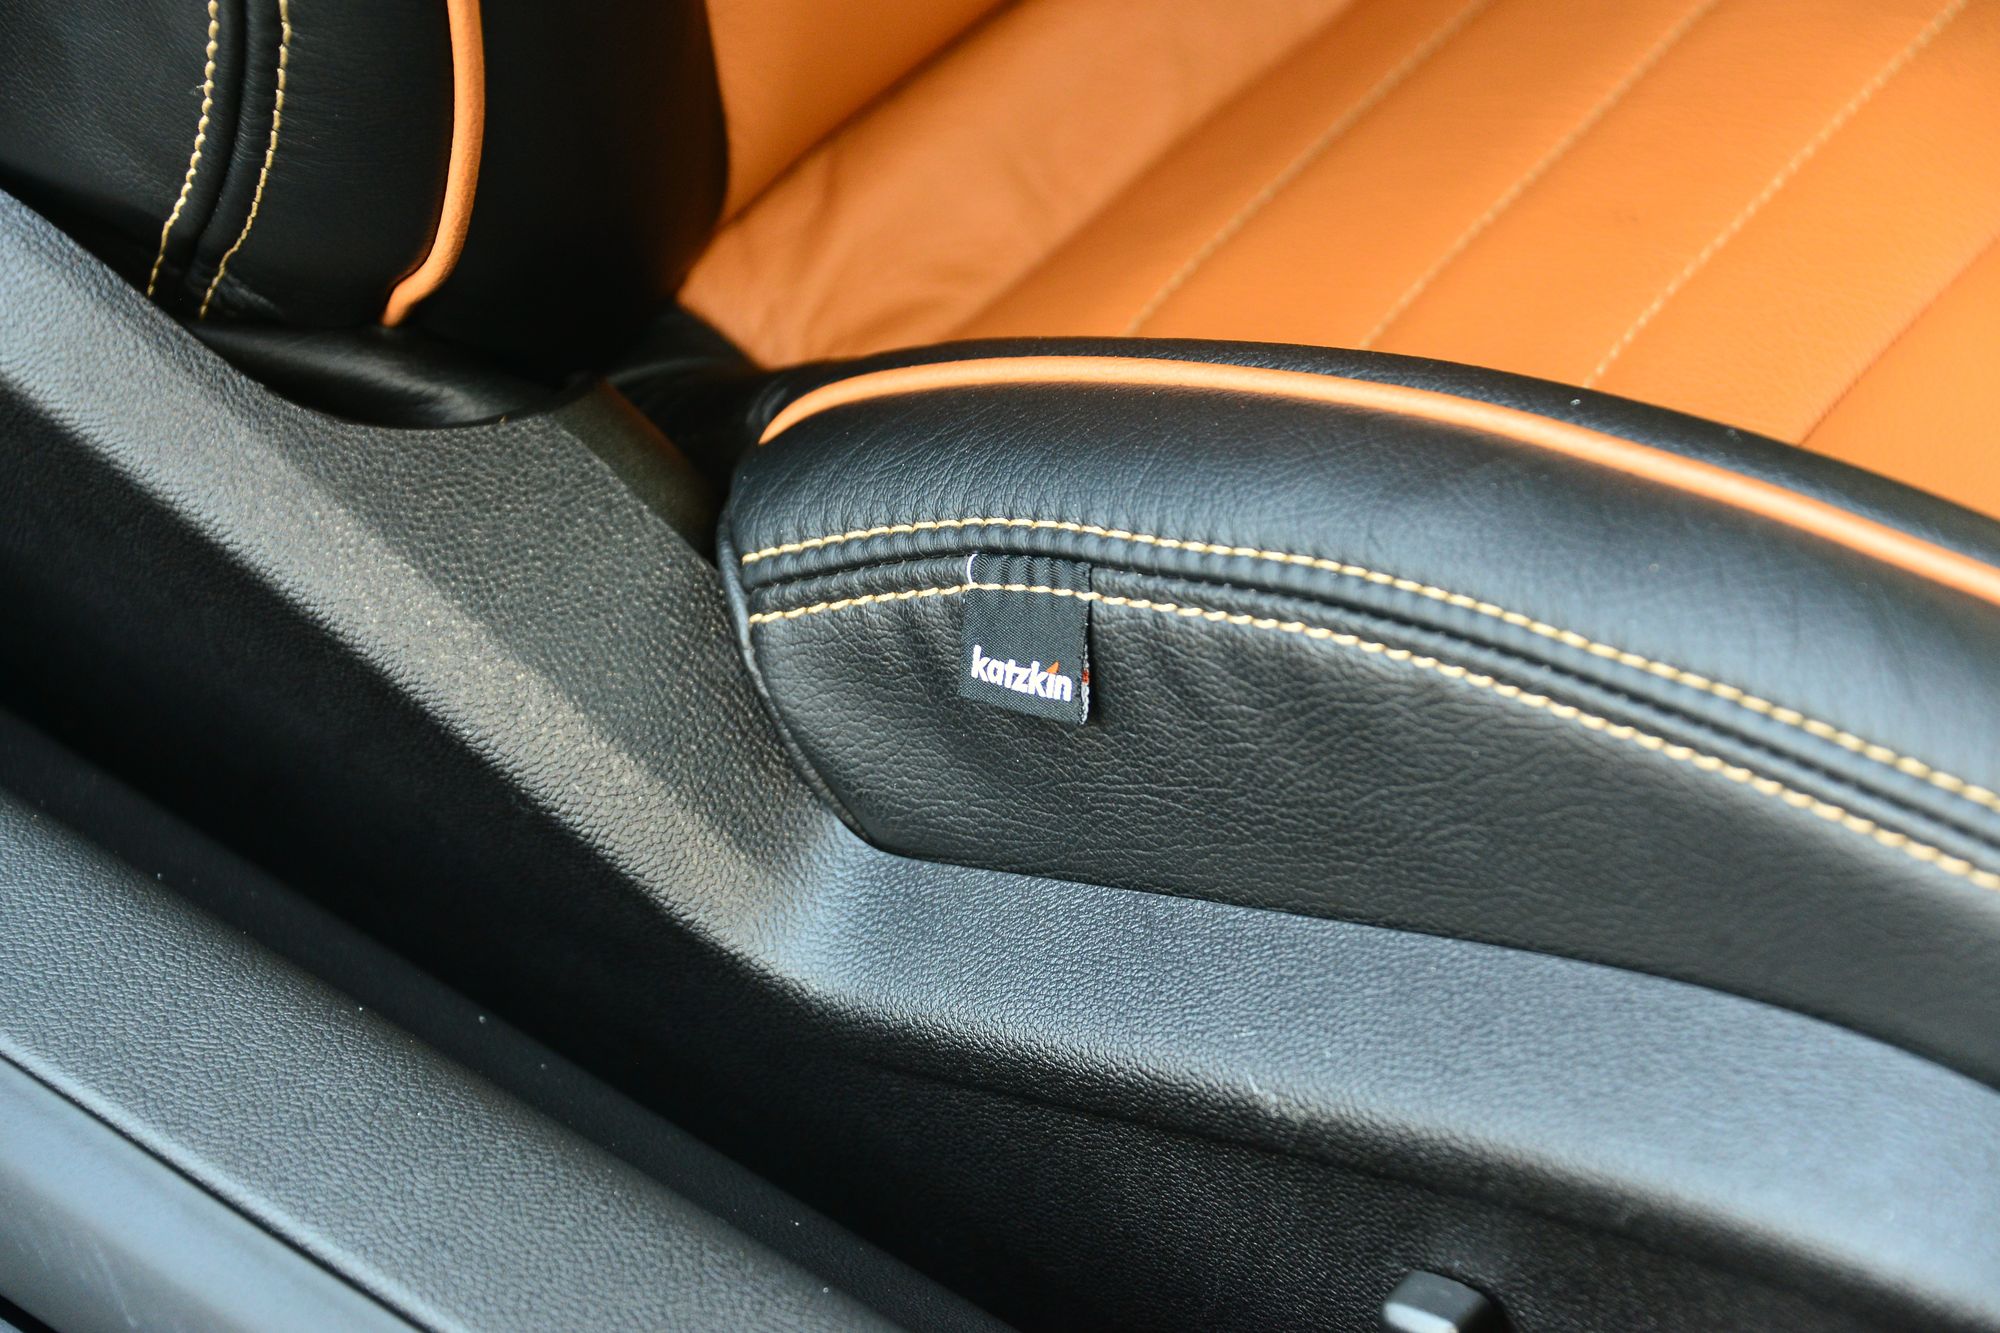 2015 Chevrolet Camaro Bandit (09 of 77)